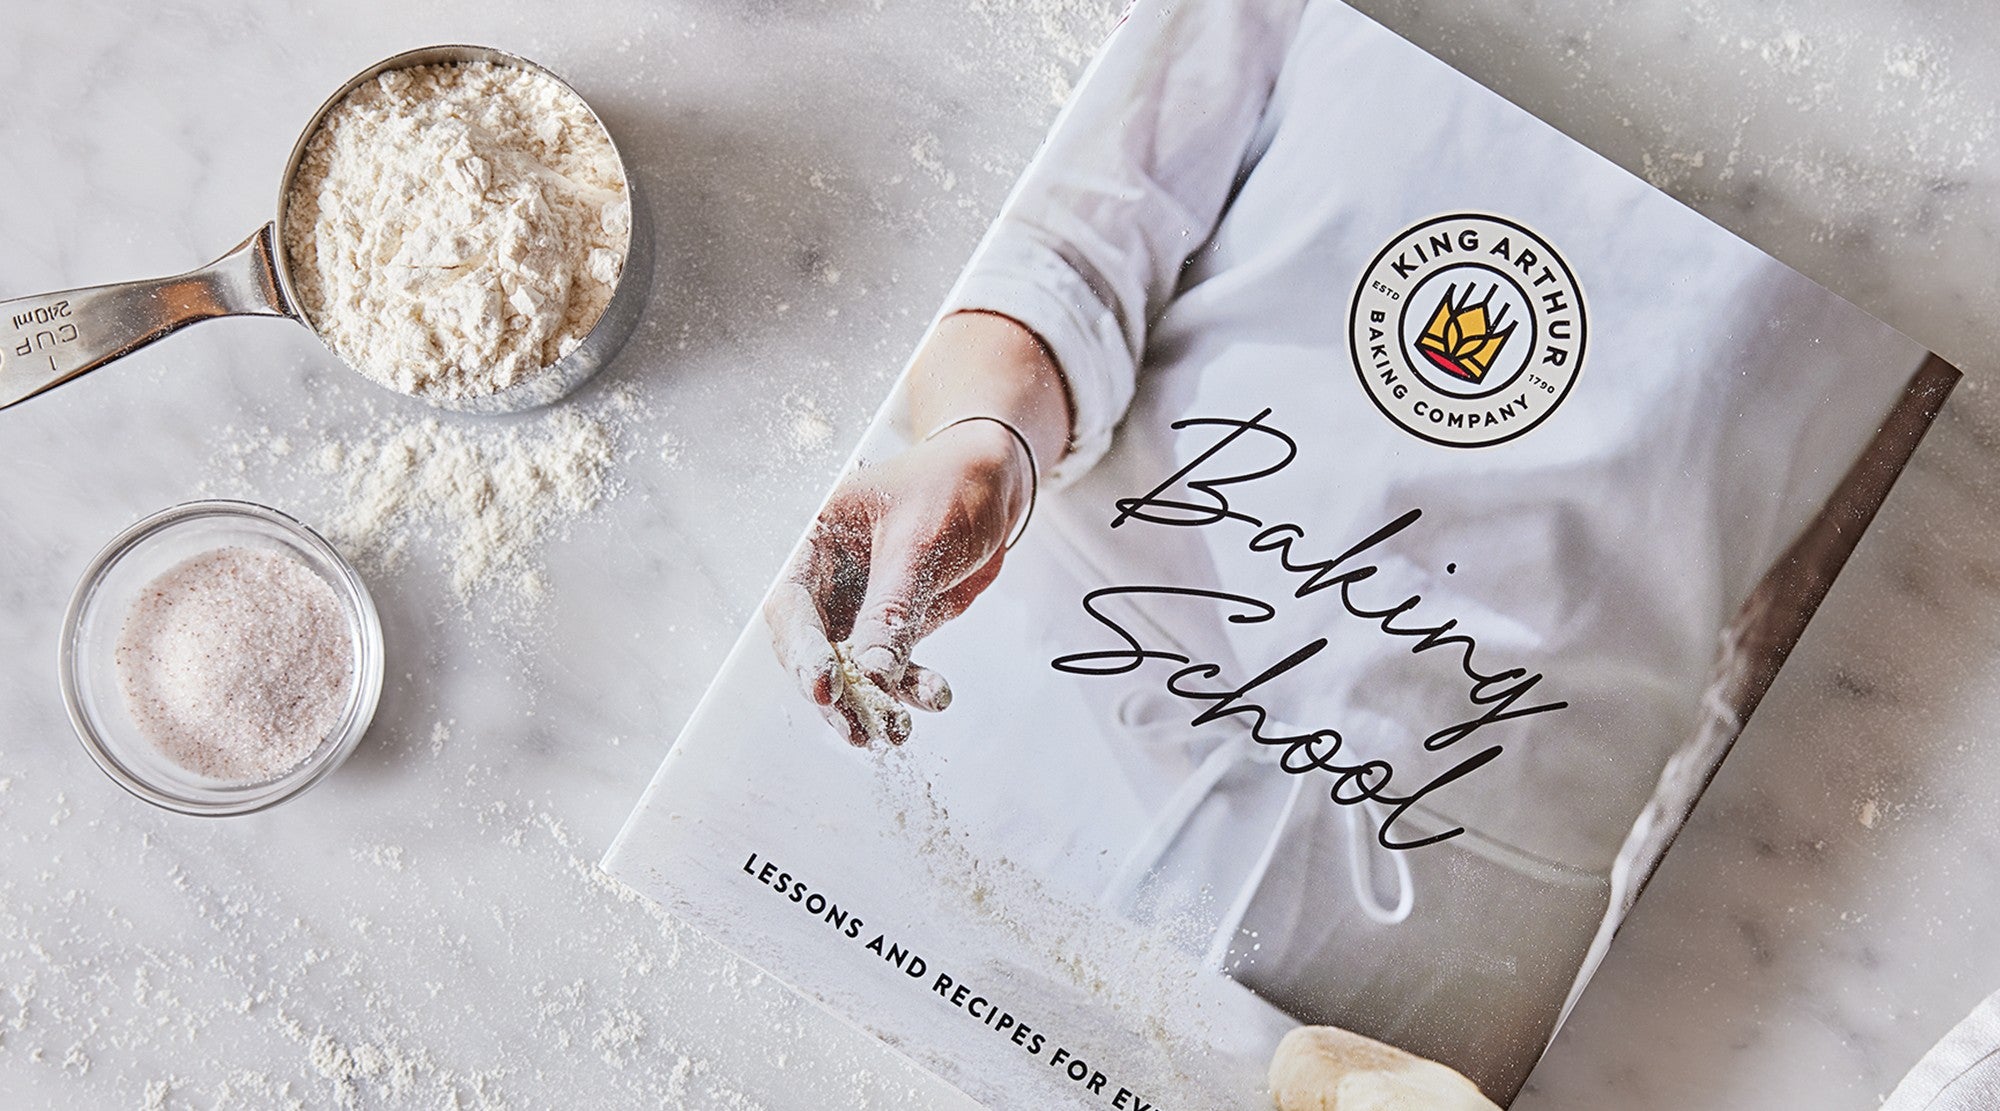 king arthur baking book review